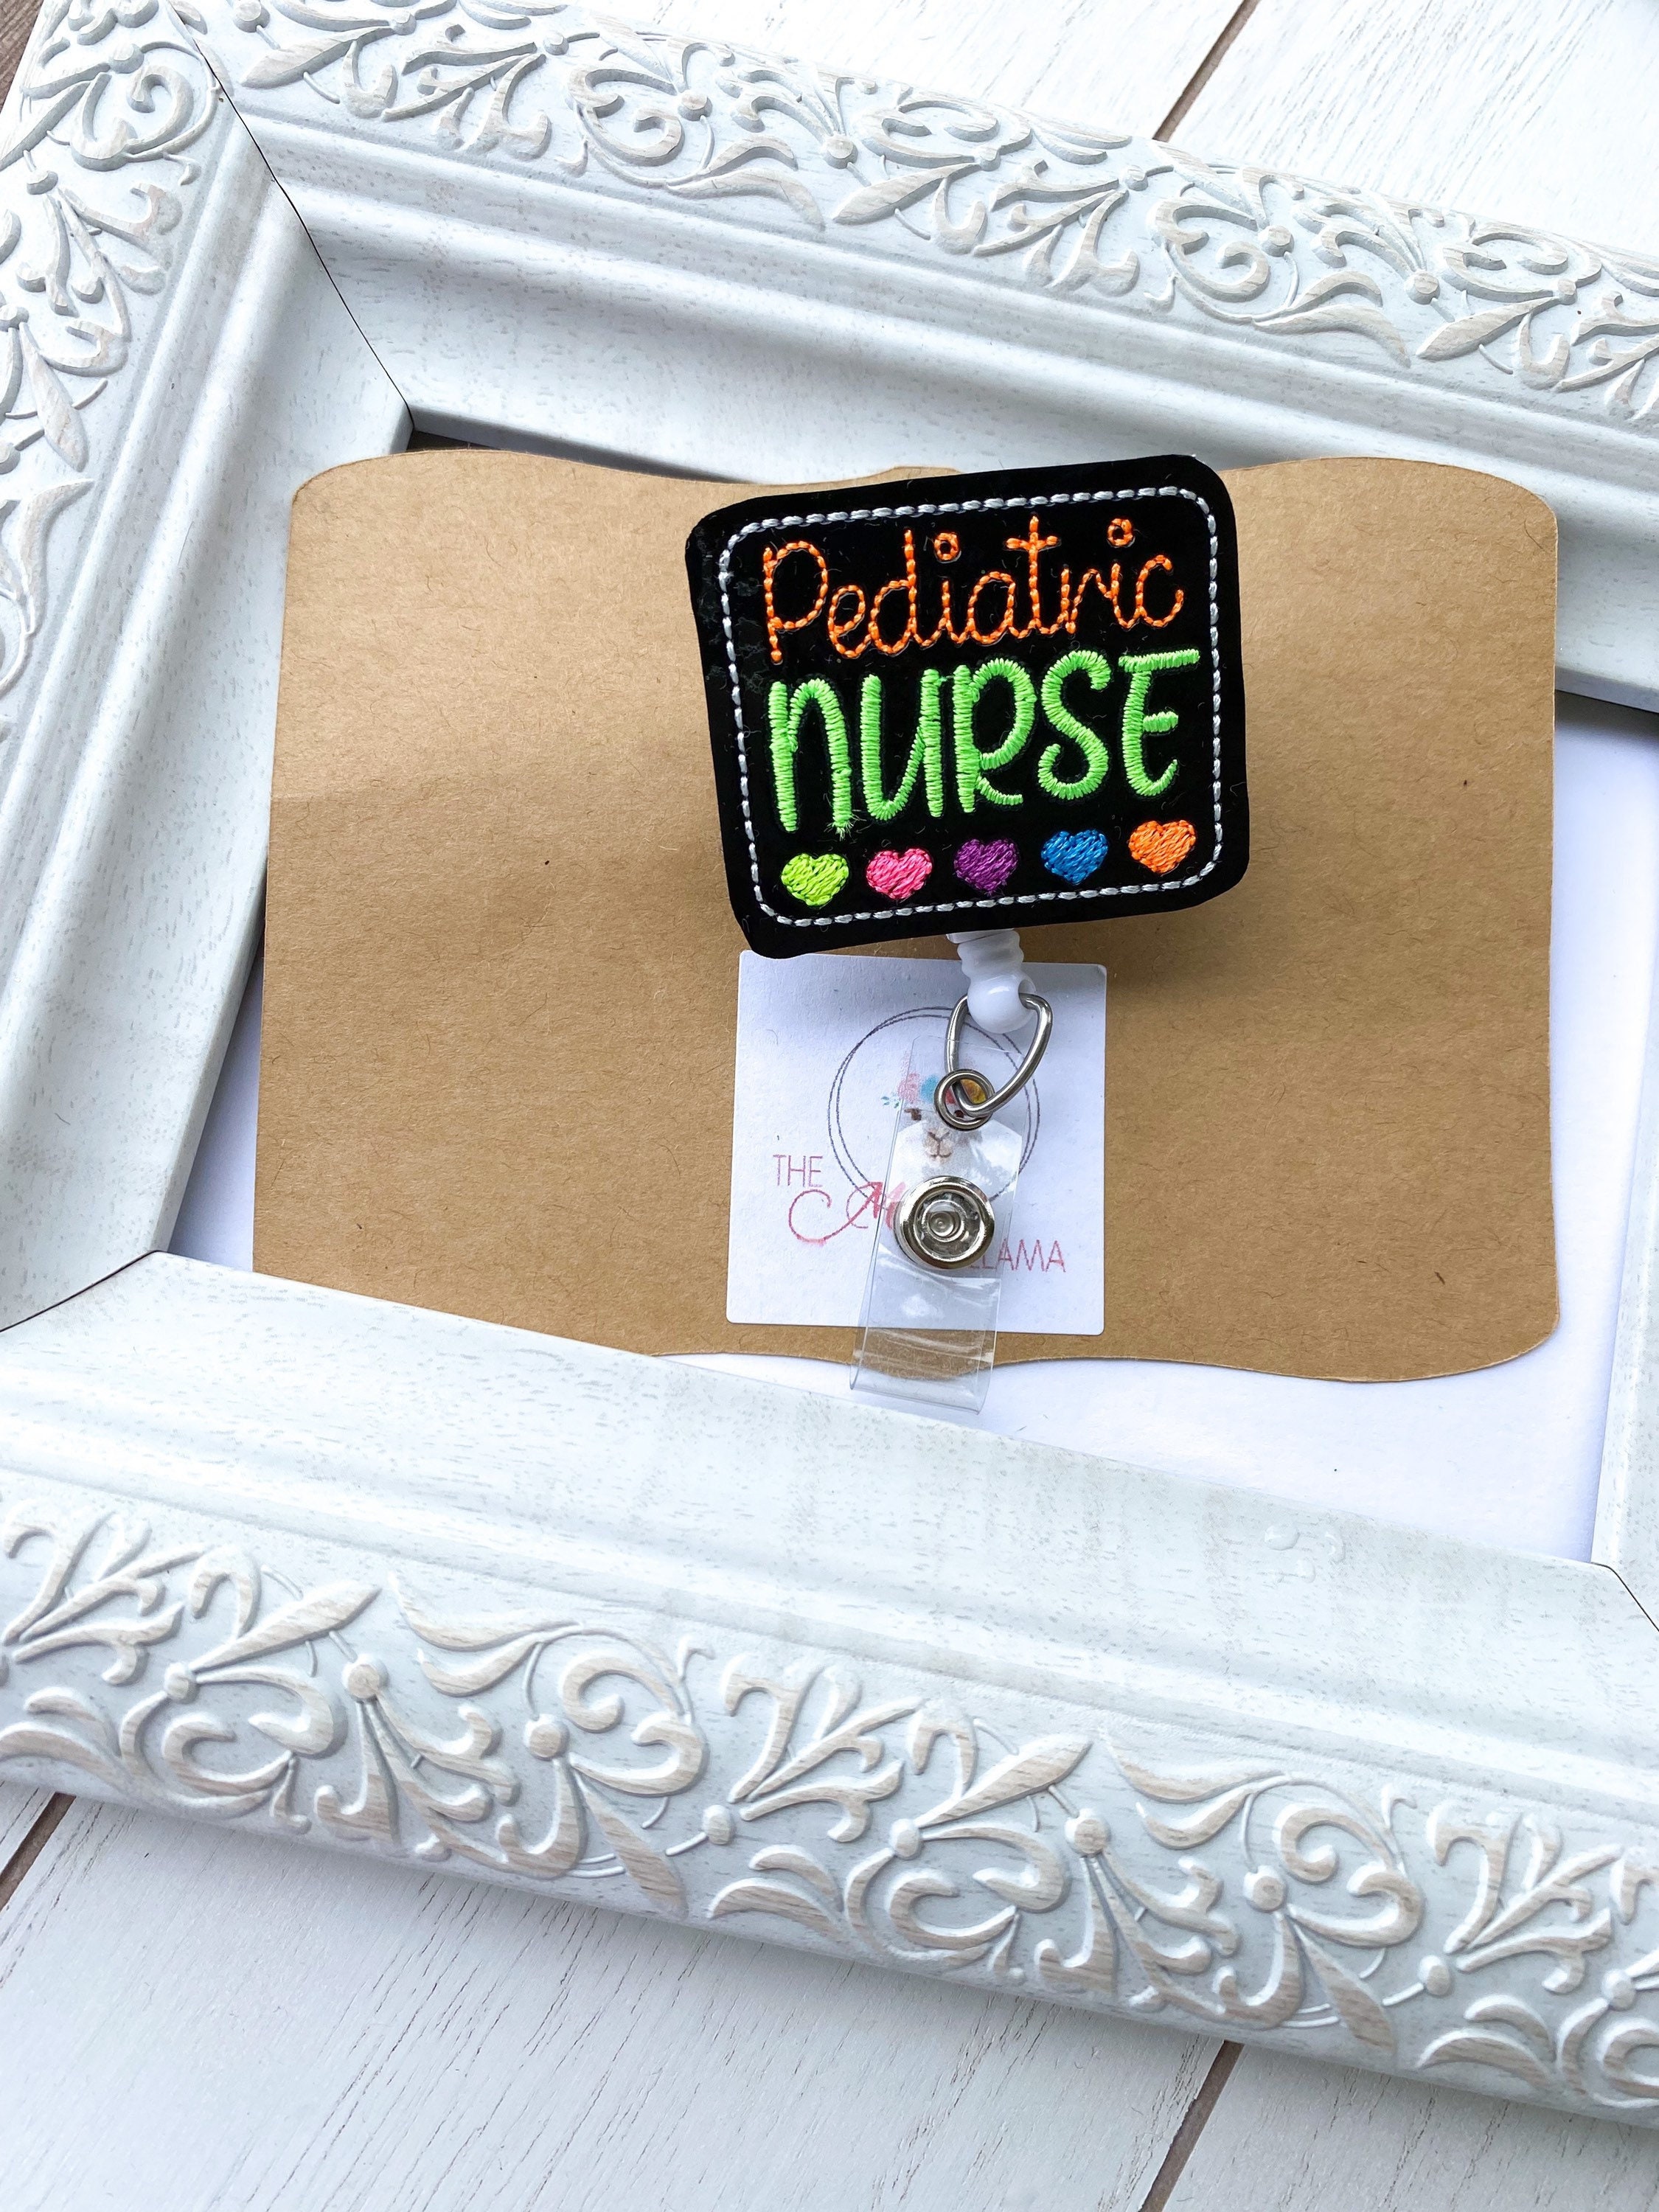 6pcs Funny Pediatric Nurse Badge Reel Cute Animal Patterns Retractable Badge Holders Fit Nurses,Doctors,Teachers,ID Card Holders and Student